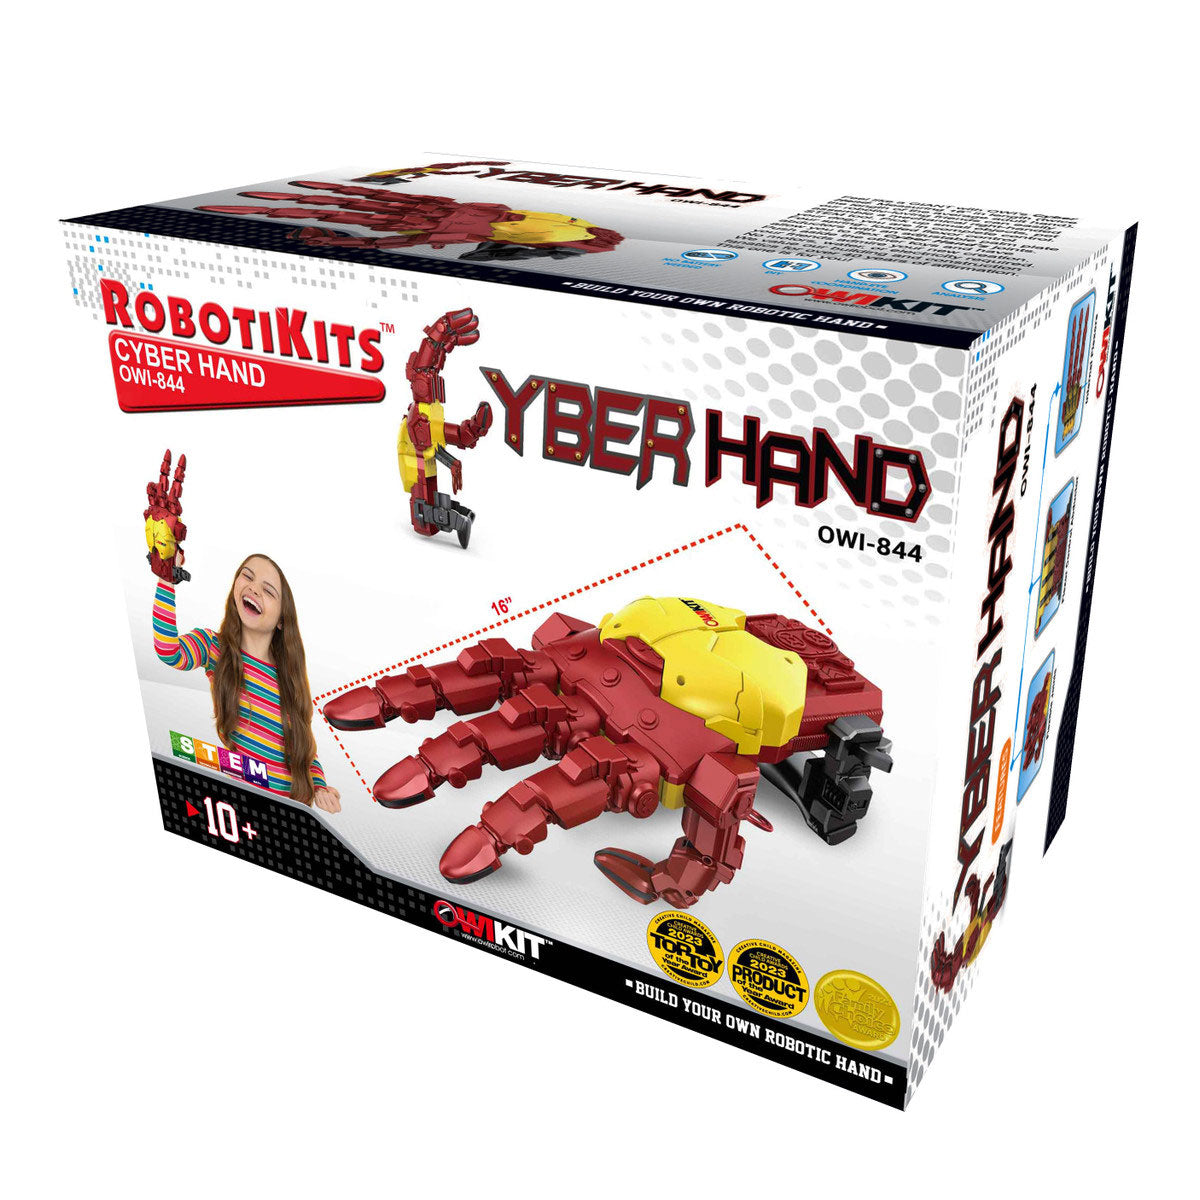 OWI RobotiKits Cyber Hand